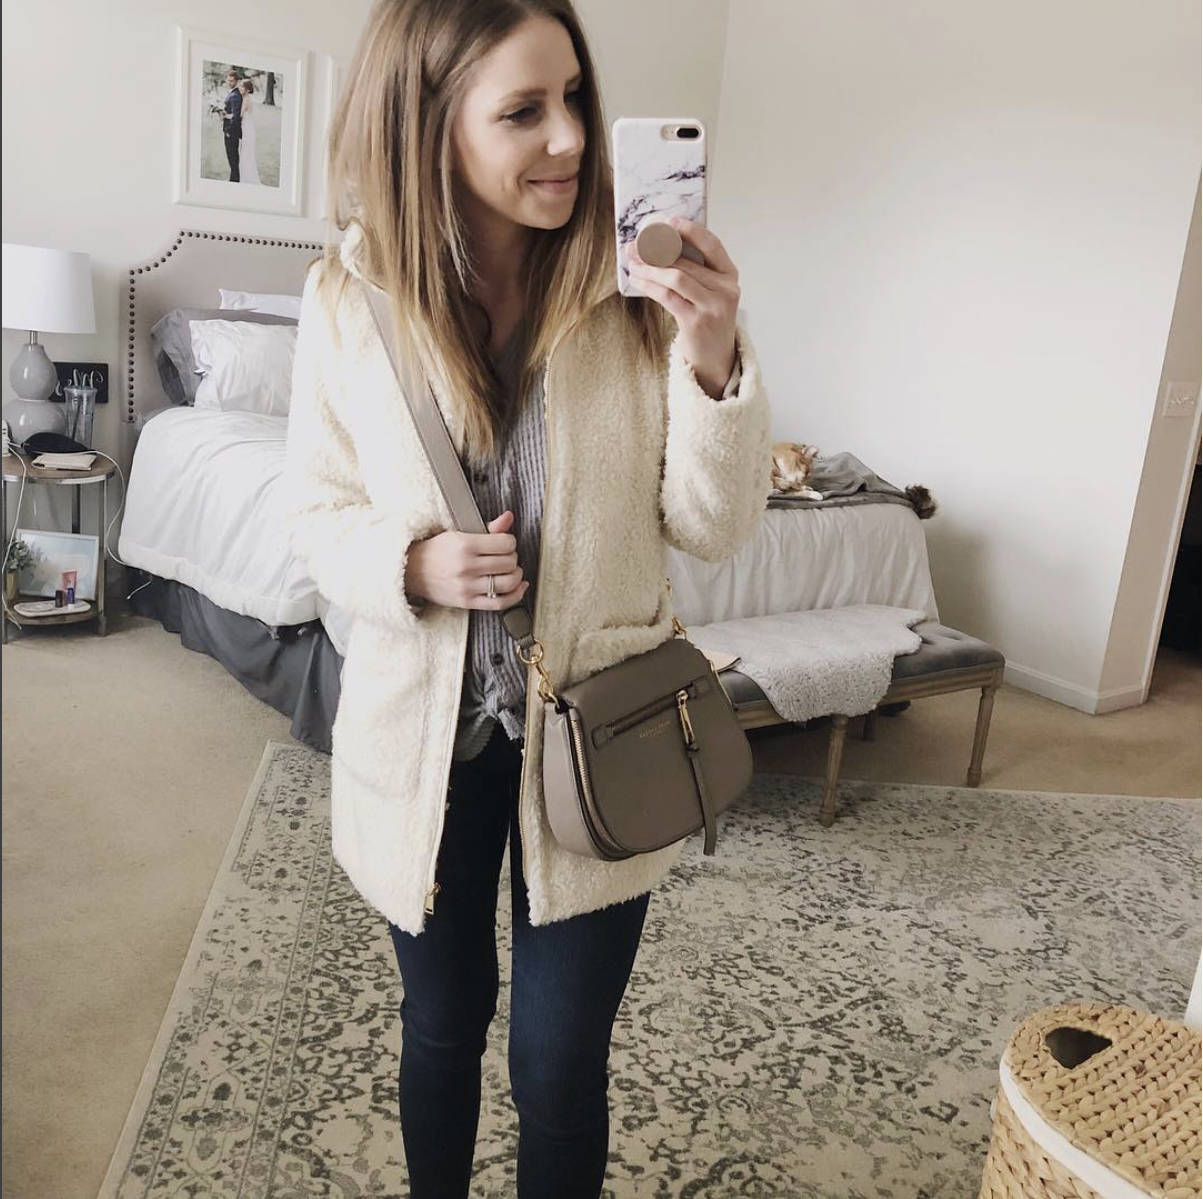 Instagram Lately • No. 01 - Lauren Bown